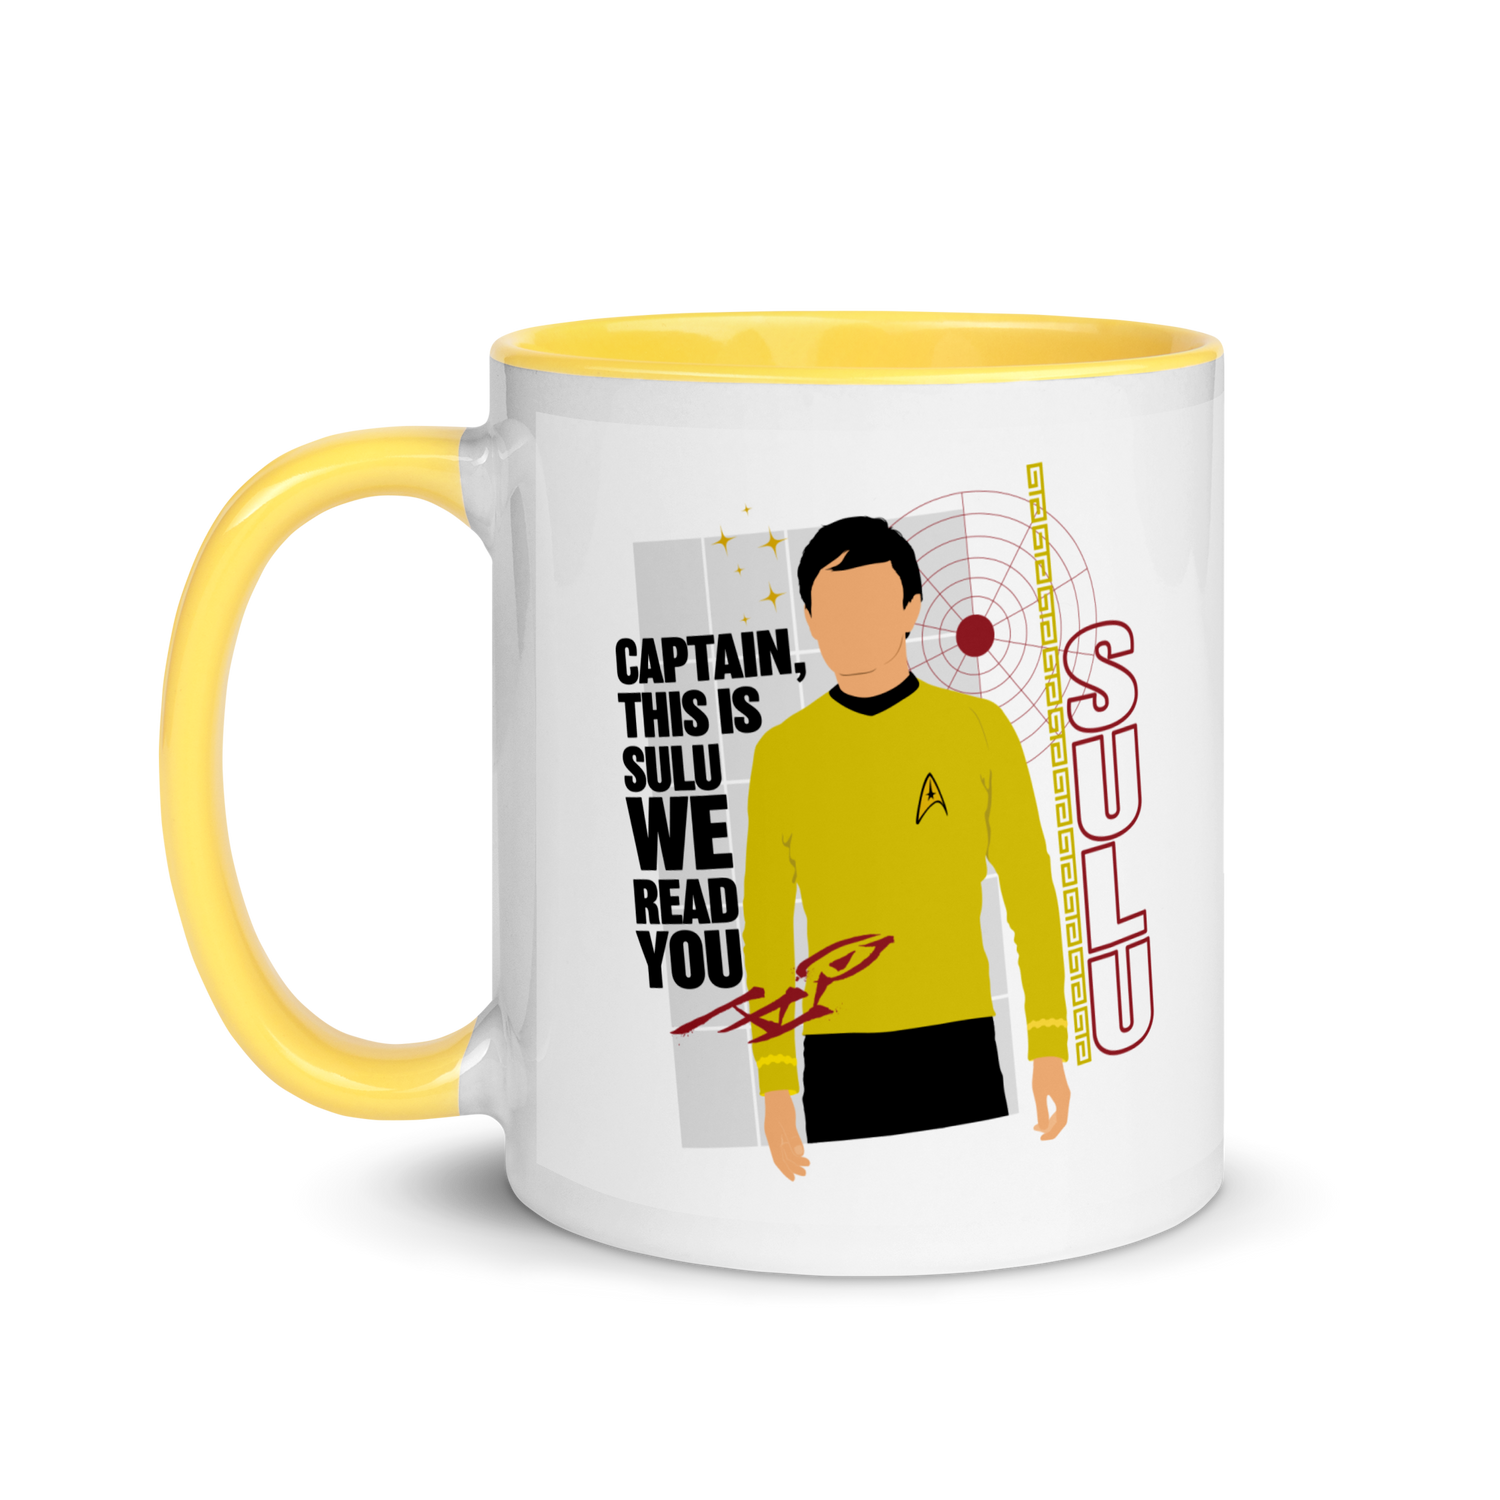 Star Trek: The Original Series Sulu Two-Tone Mug